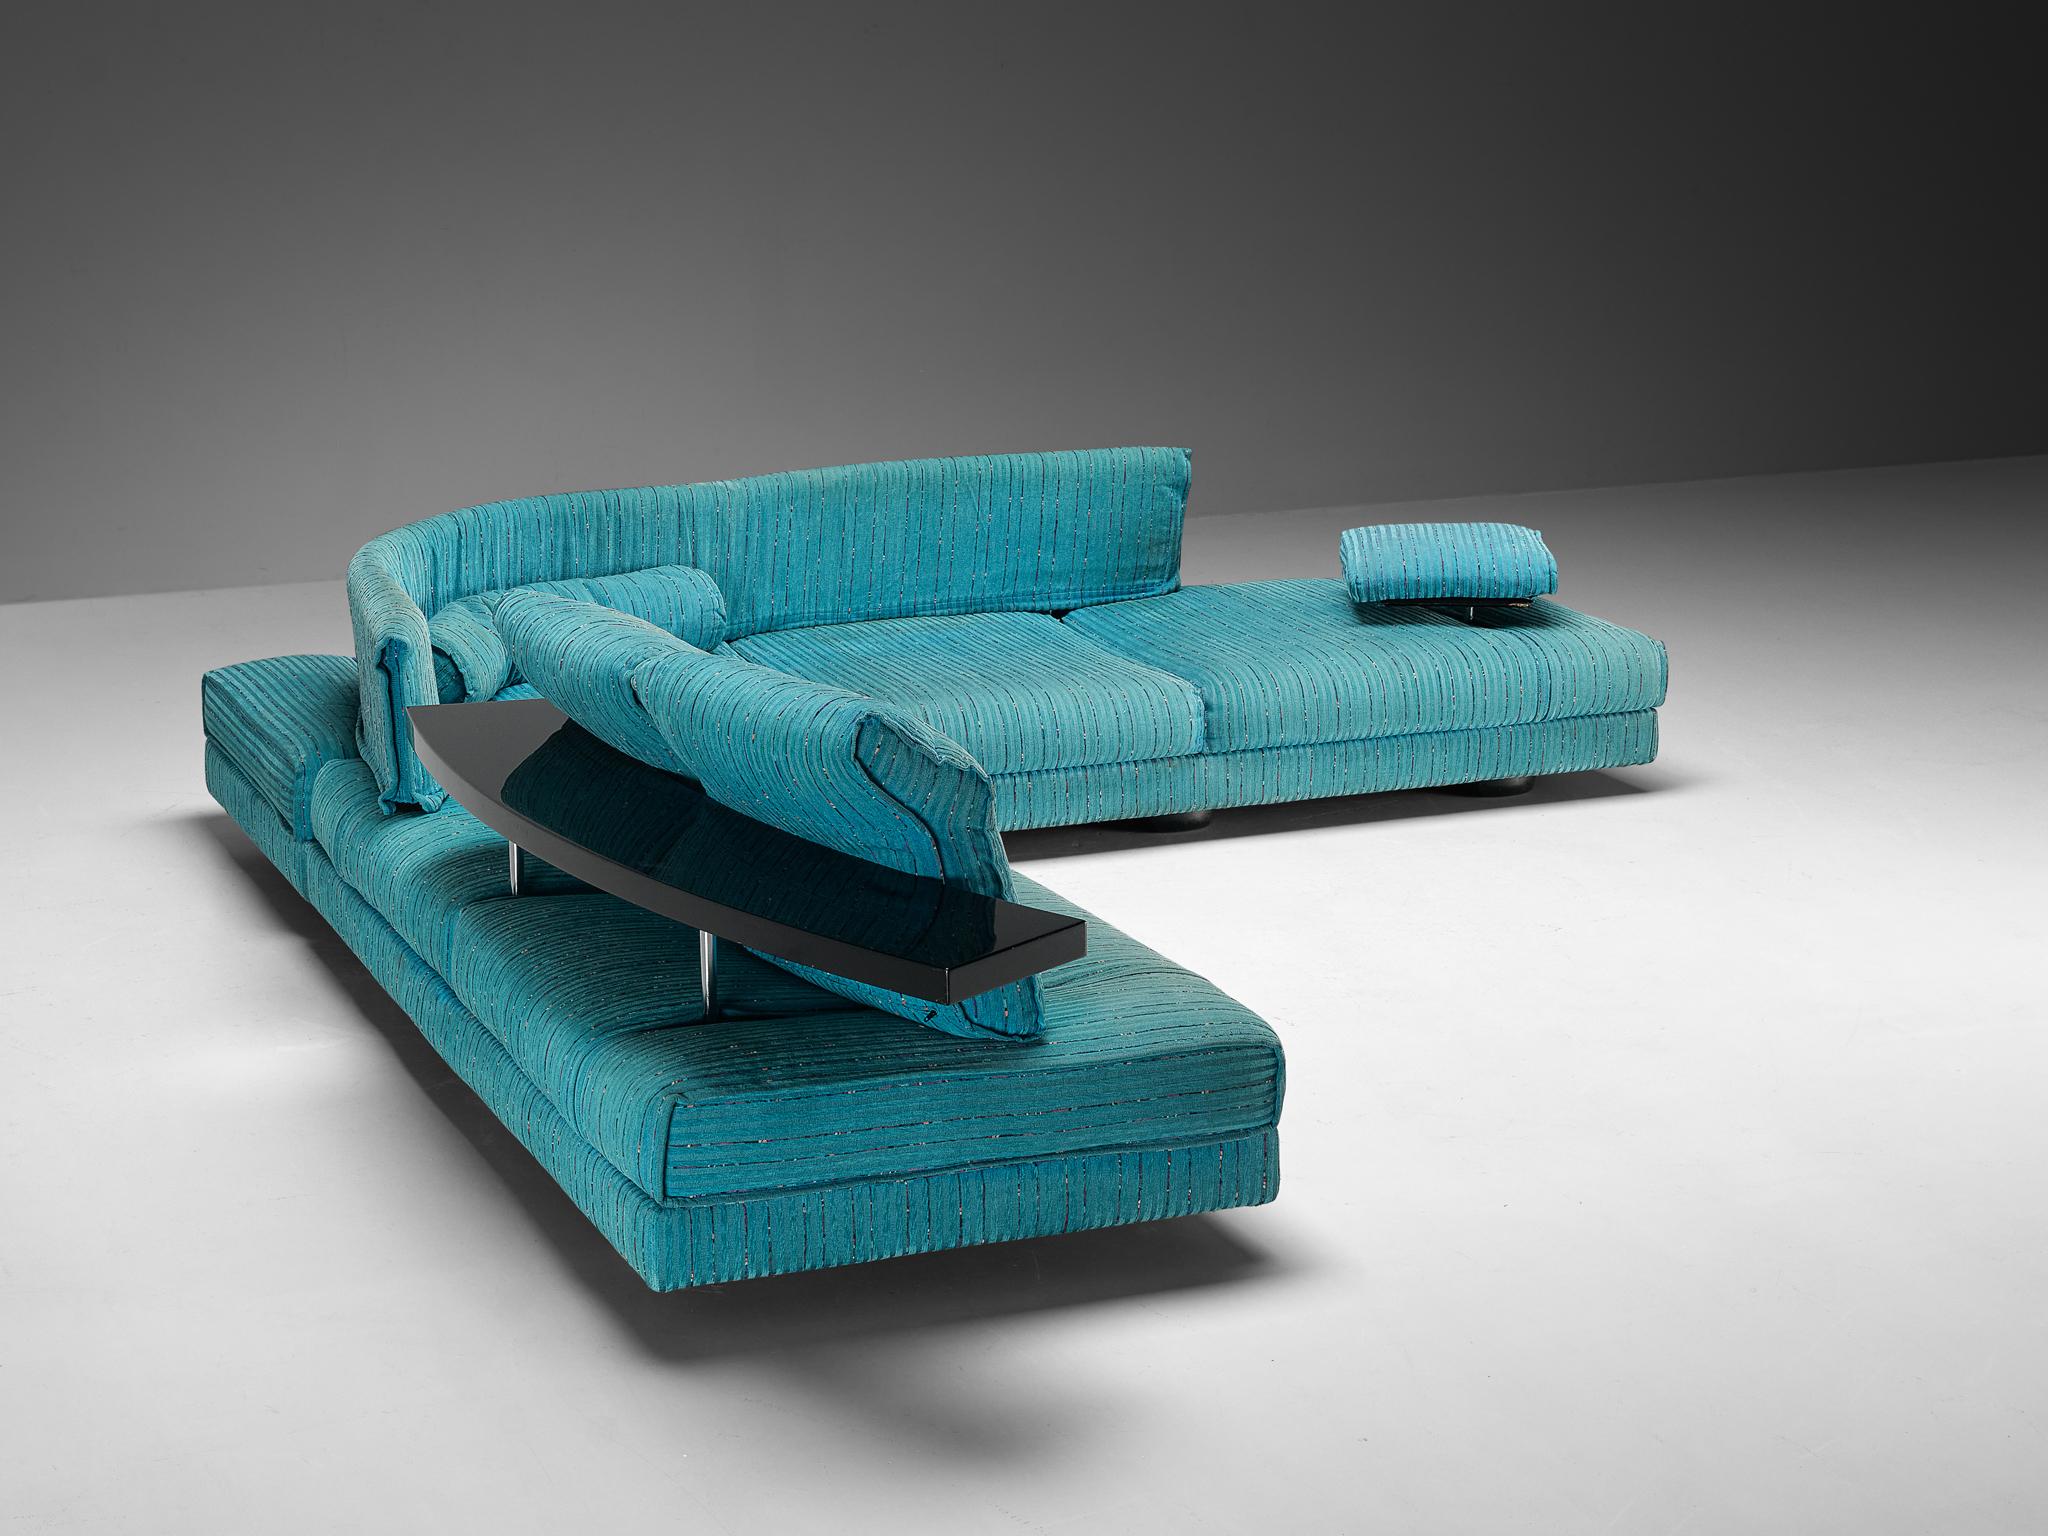 Late 20th Century Mauro Lipparini for Saporiti 'Avedon' Sofa in Turquoise Upholstery For Sale